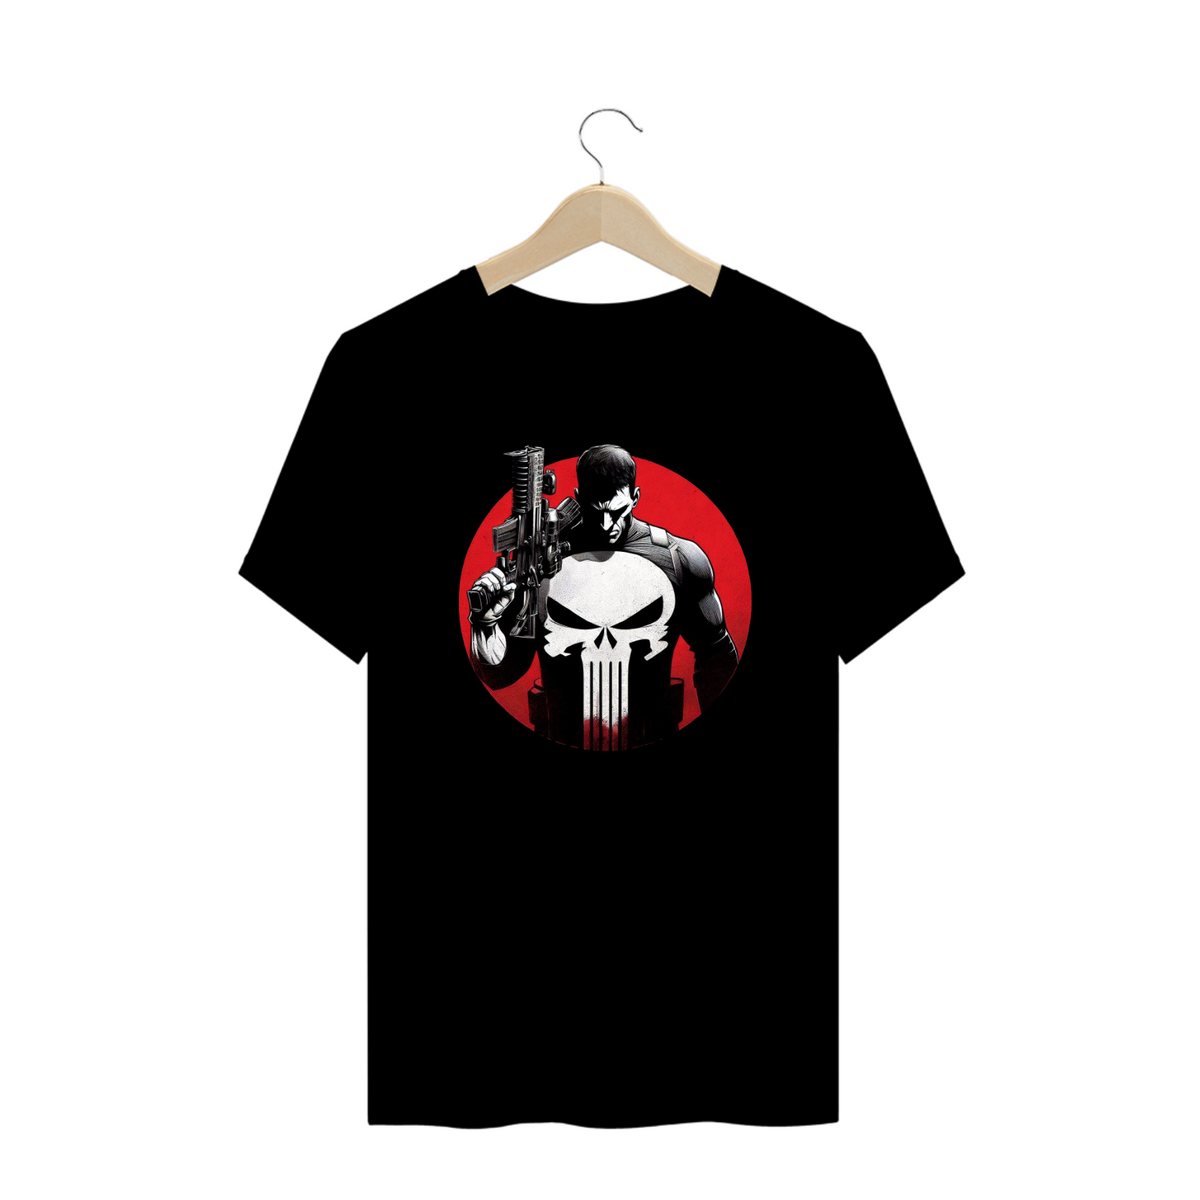 Nome do produto: Camisa The Punisher